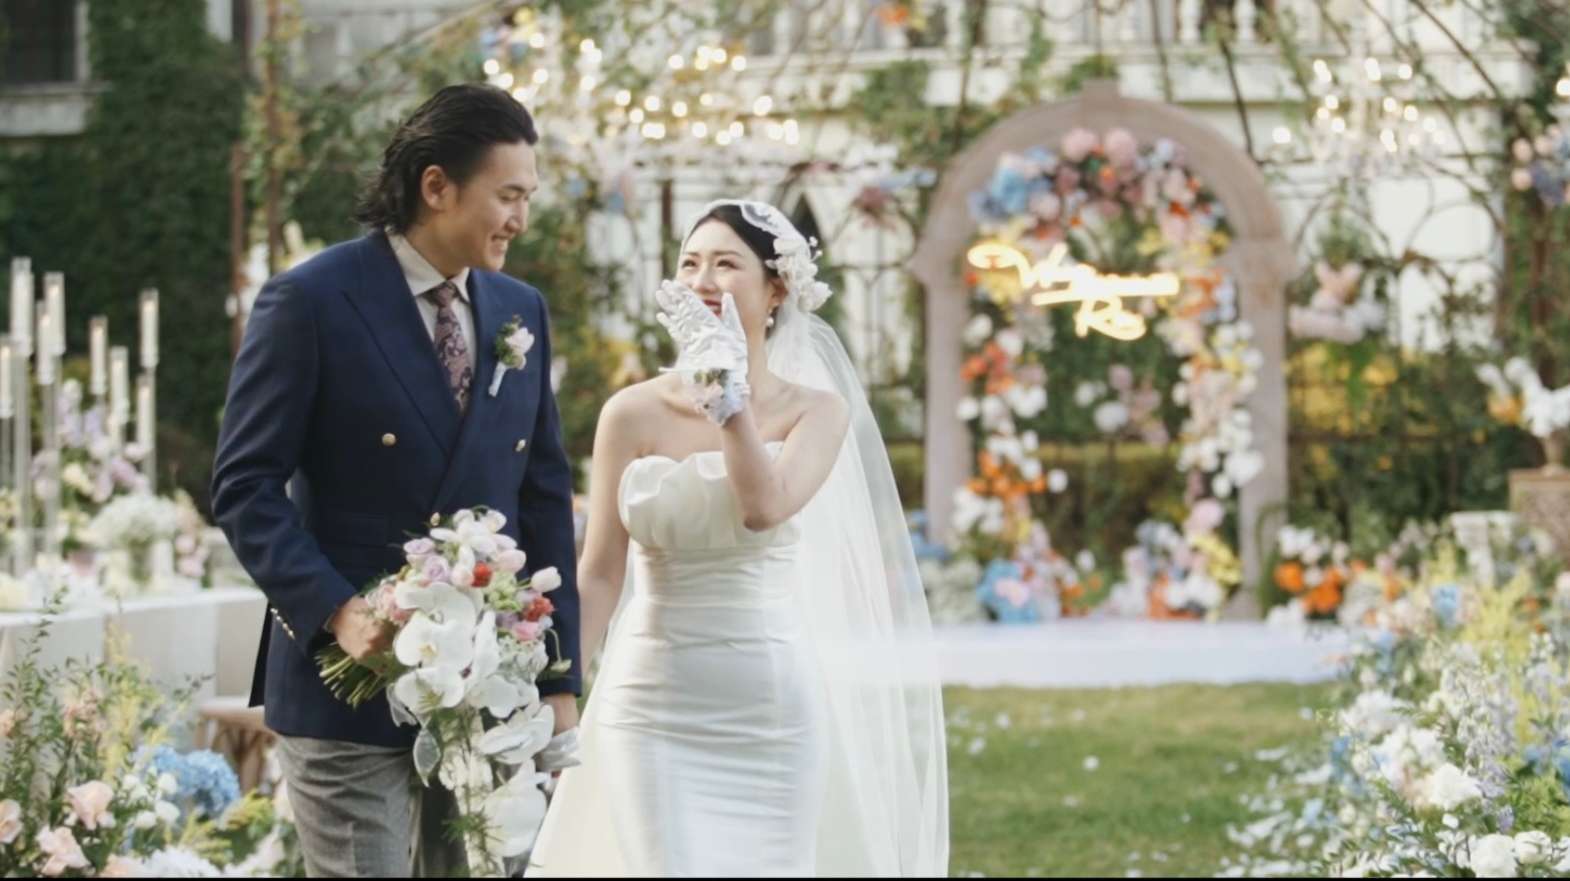 Wang & Ren 长春左右庄园婚礼 - 小渔电影